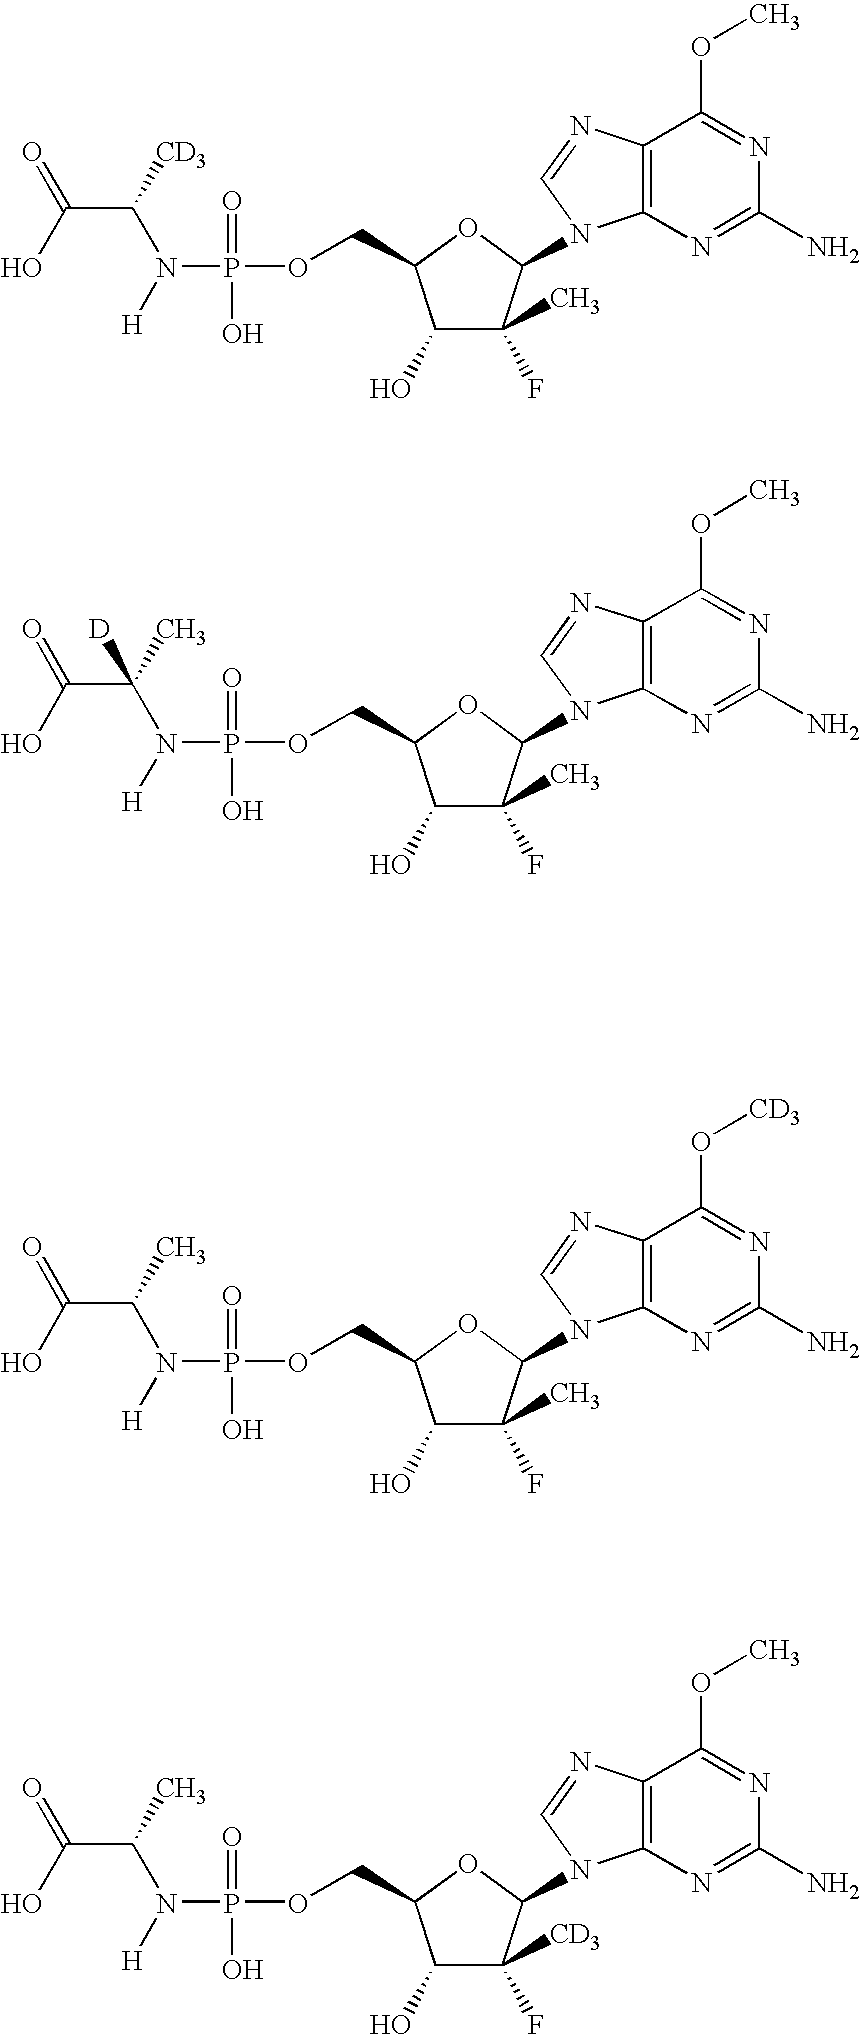 Nucleoside analogs